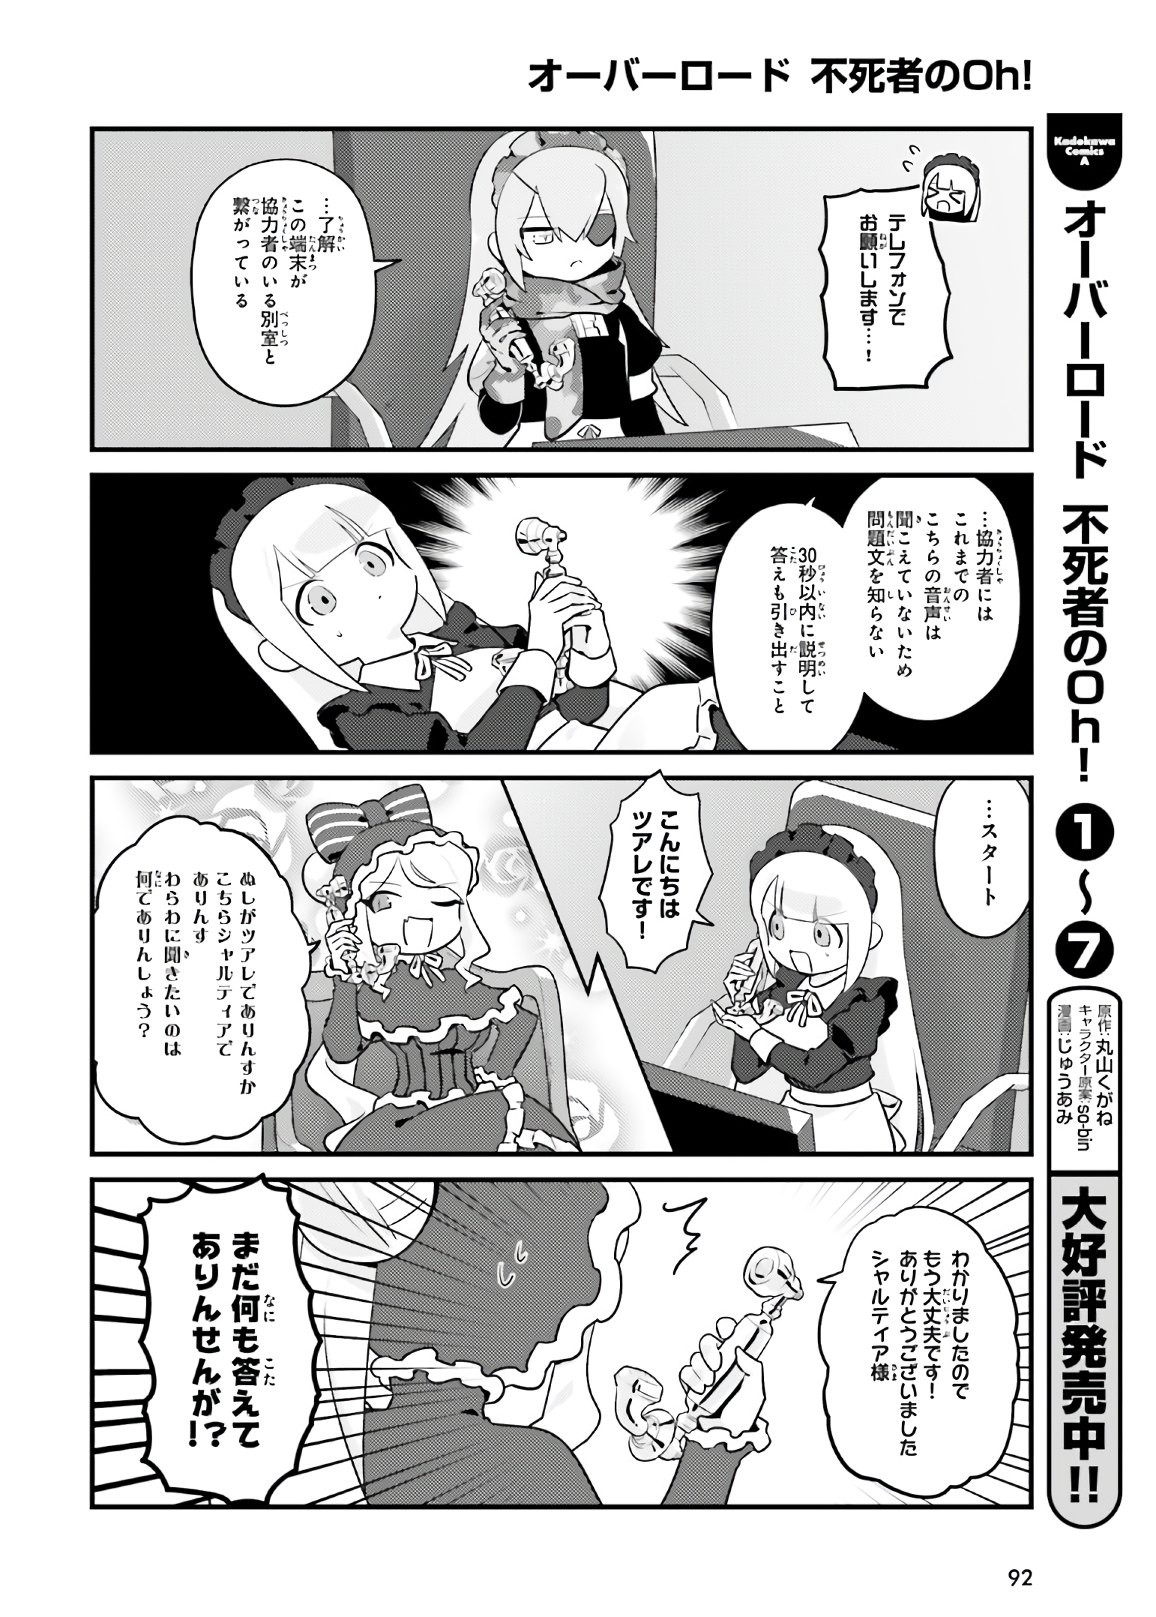 Overlord Fushisha No Oh Chapter 45 Page 14 Raw Sen Manga